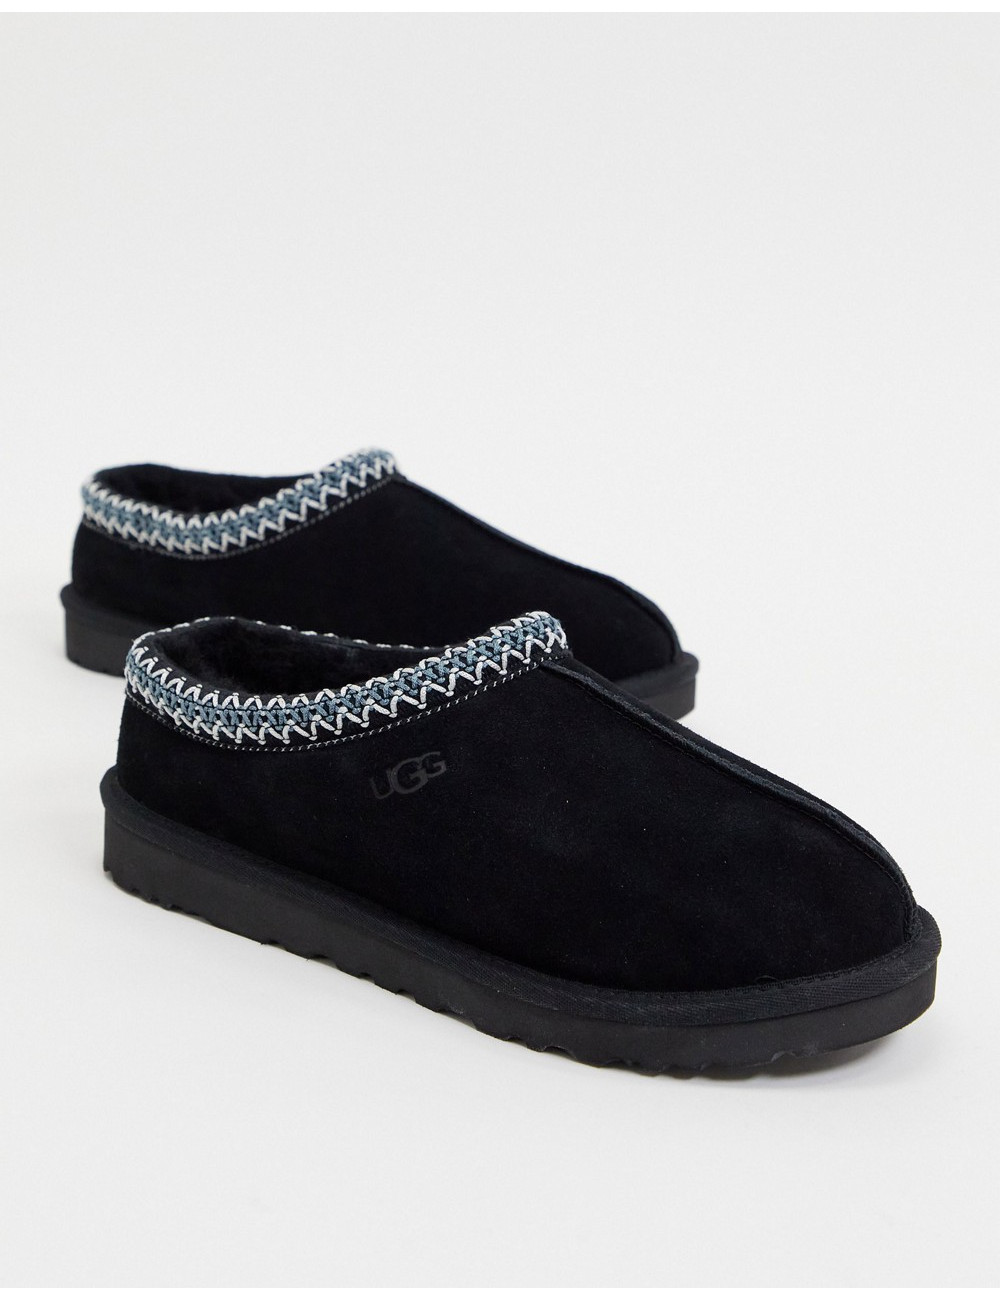 UGG tasman slippers black